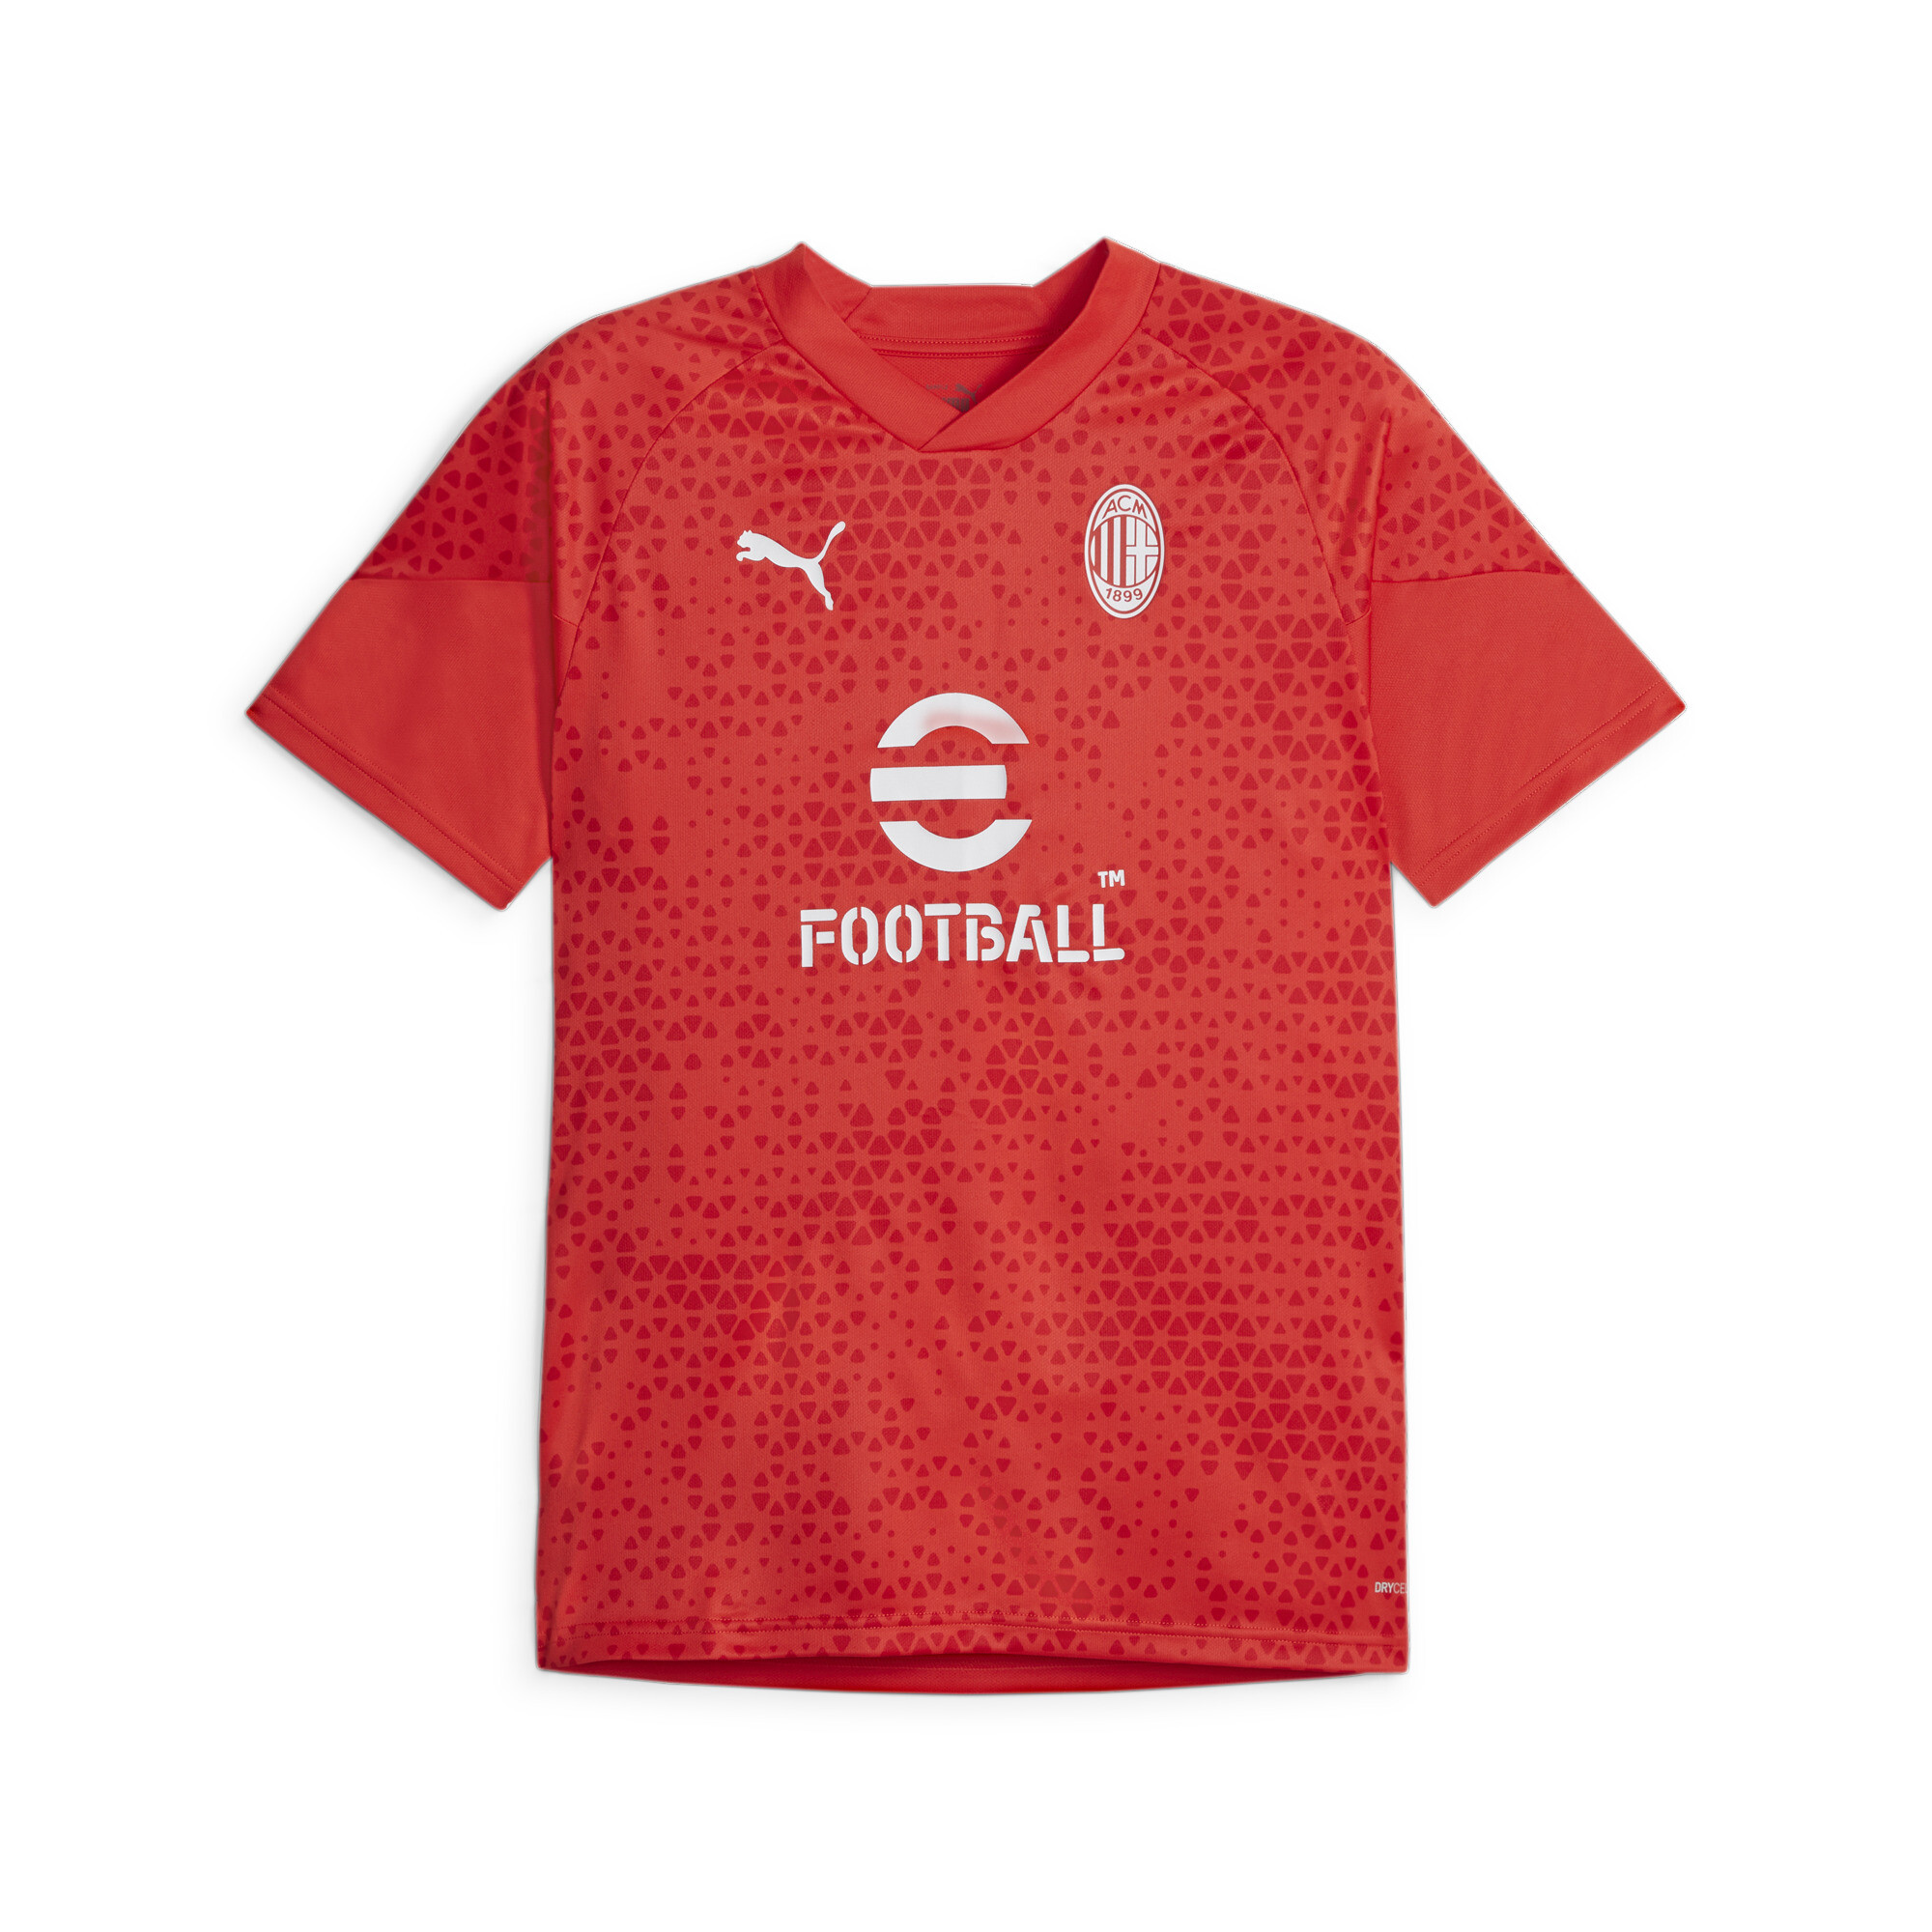 Men's PUMA AC Milan Football Training Jersey In Red, Size Large